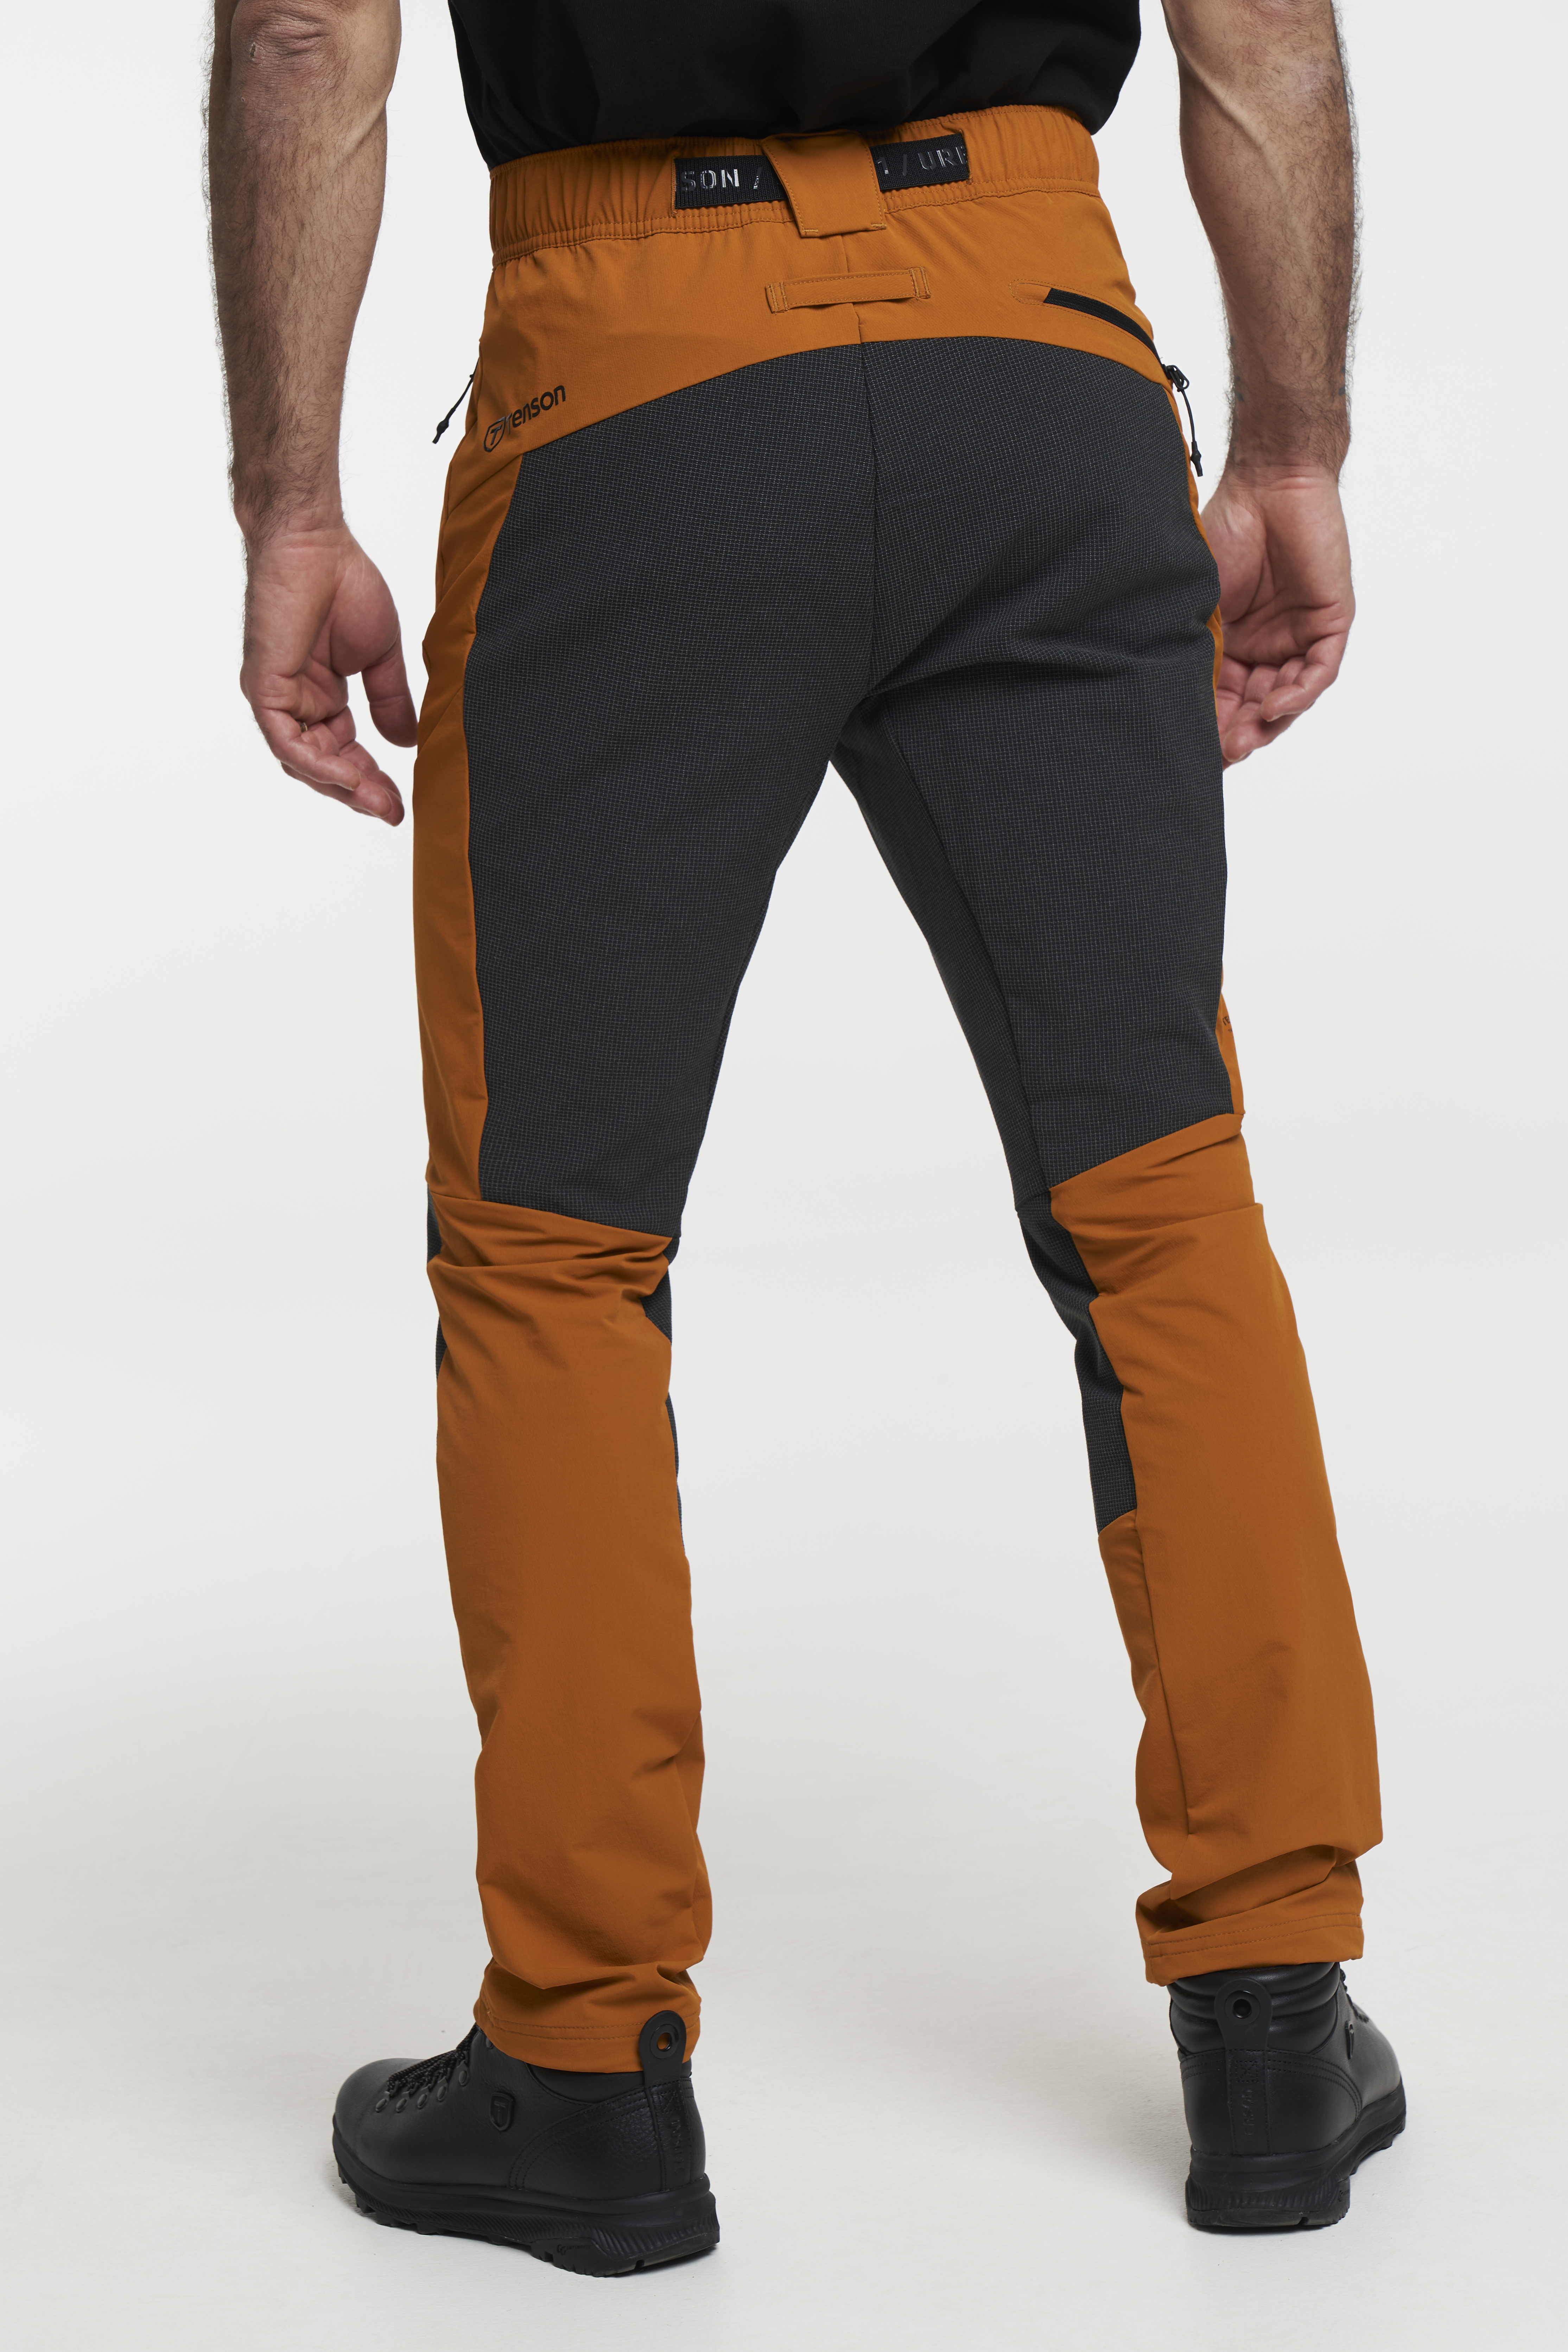 Quechua SH100 Men's Ultra-Warm Snow Hiking Trousers - Grey (UK40 EU48 (L34)  : Amazon.in: Sports, Fitness & Outdoors